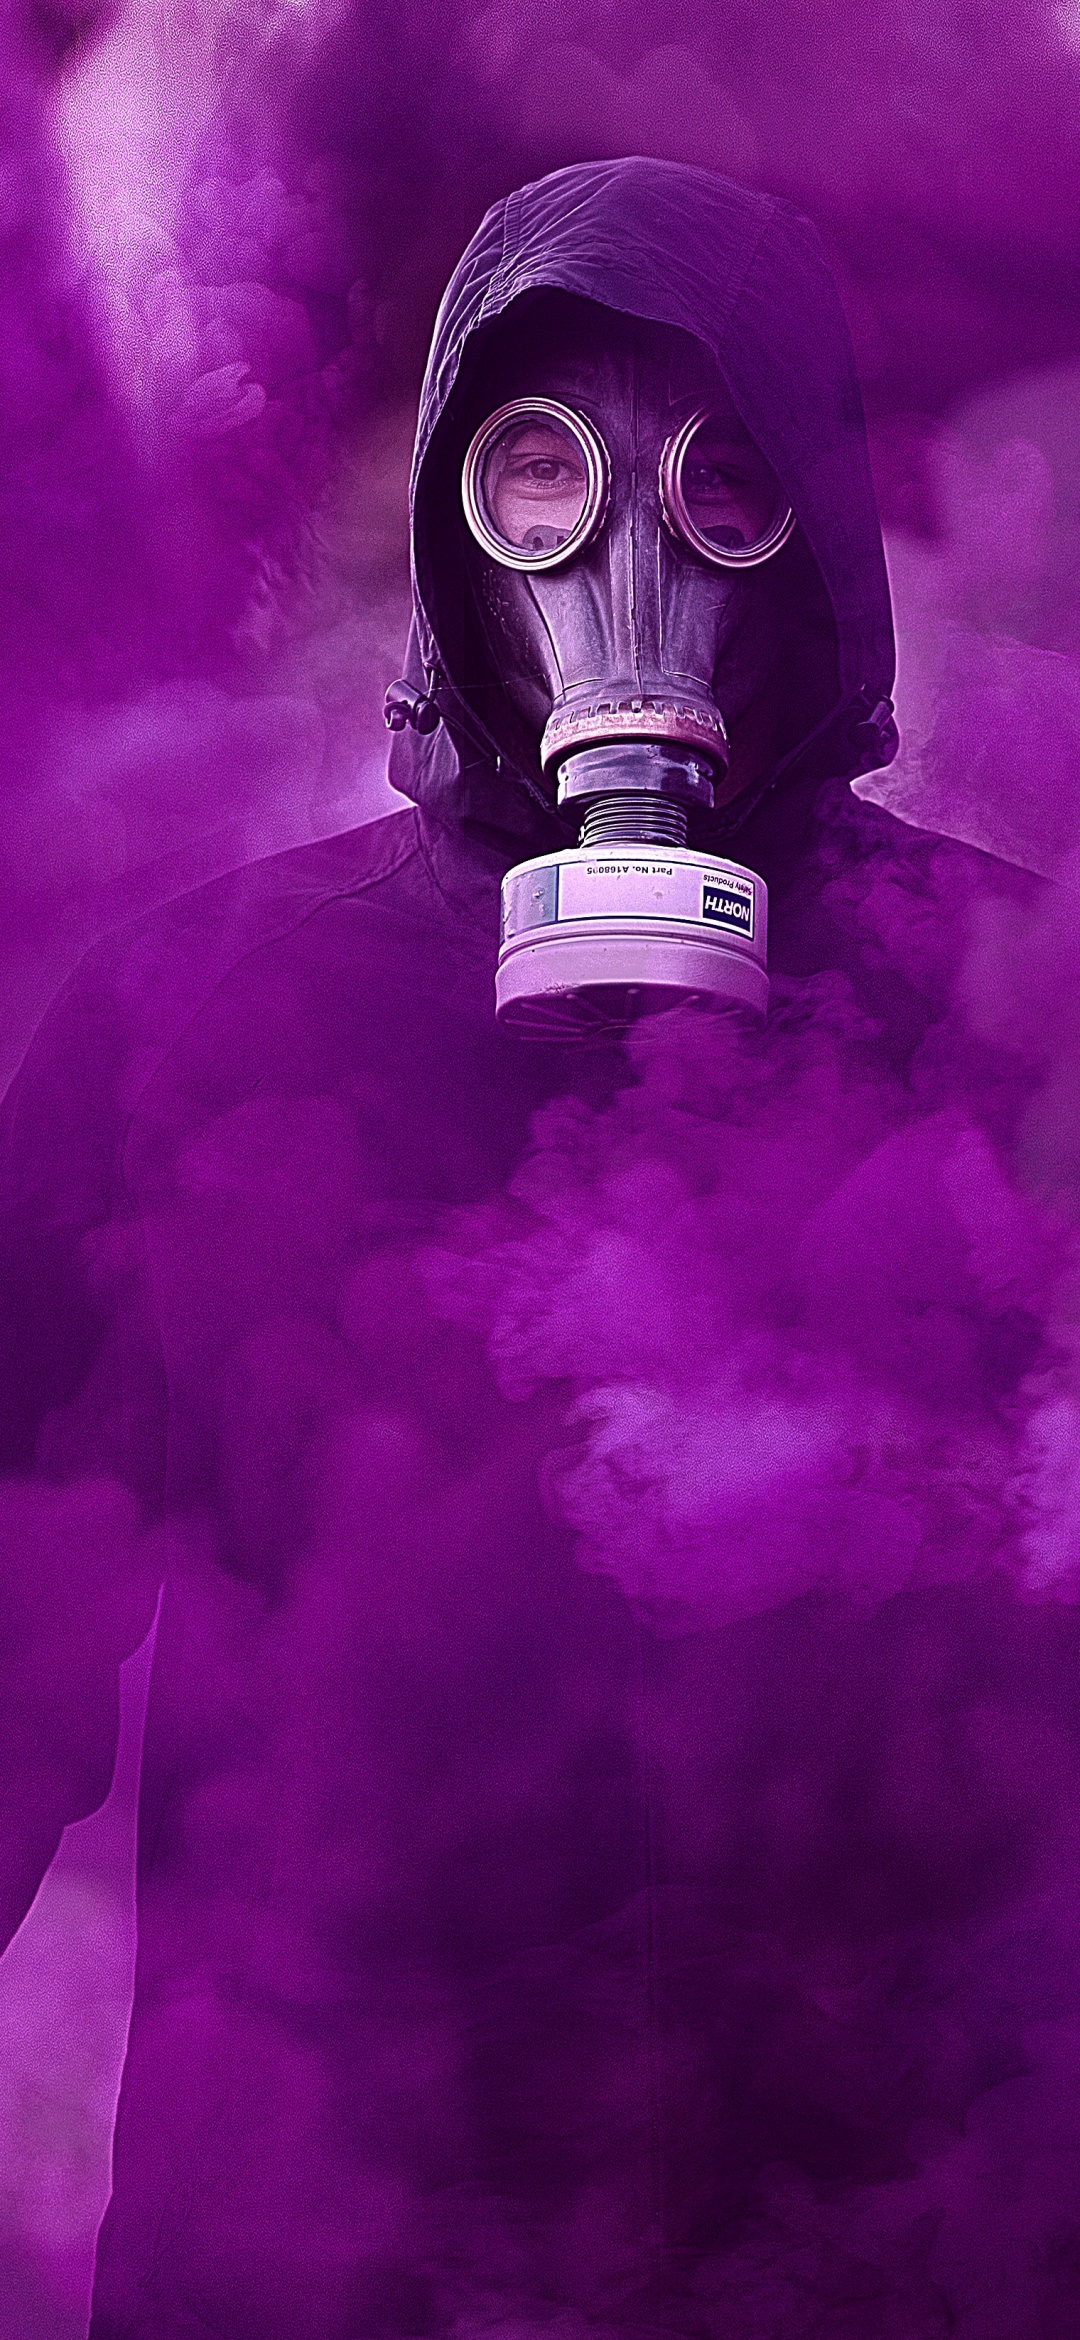 Gas mask Wallpaper 4K, Hoodie, Person in Black, Purple Smoke, People, #3324